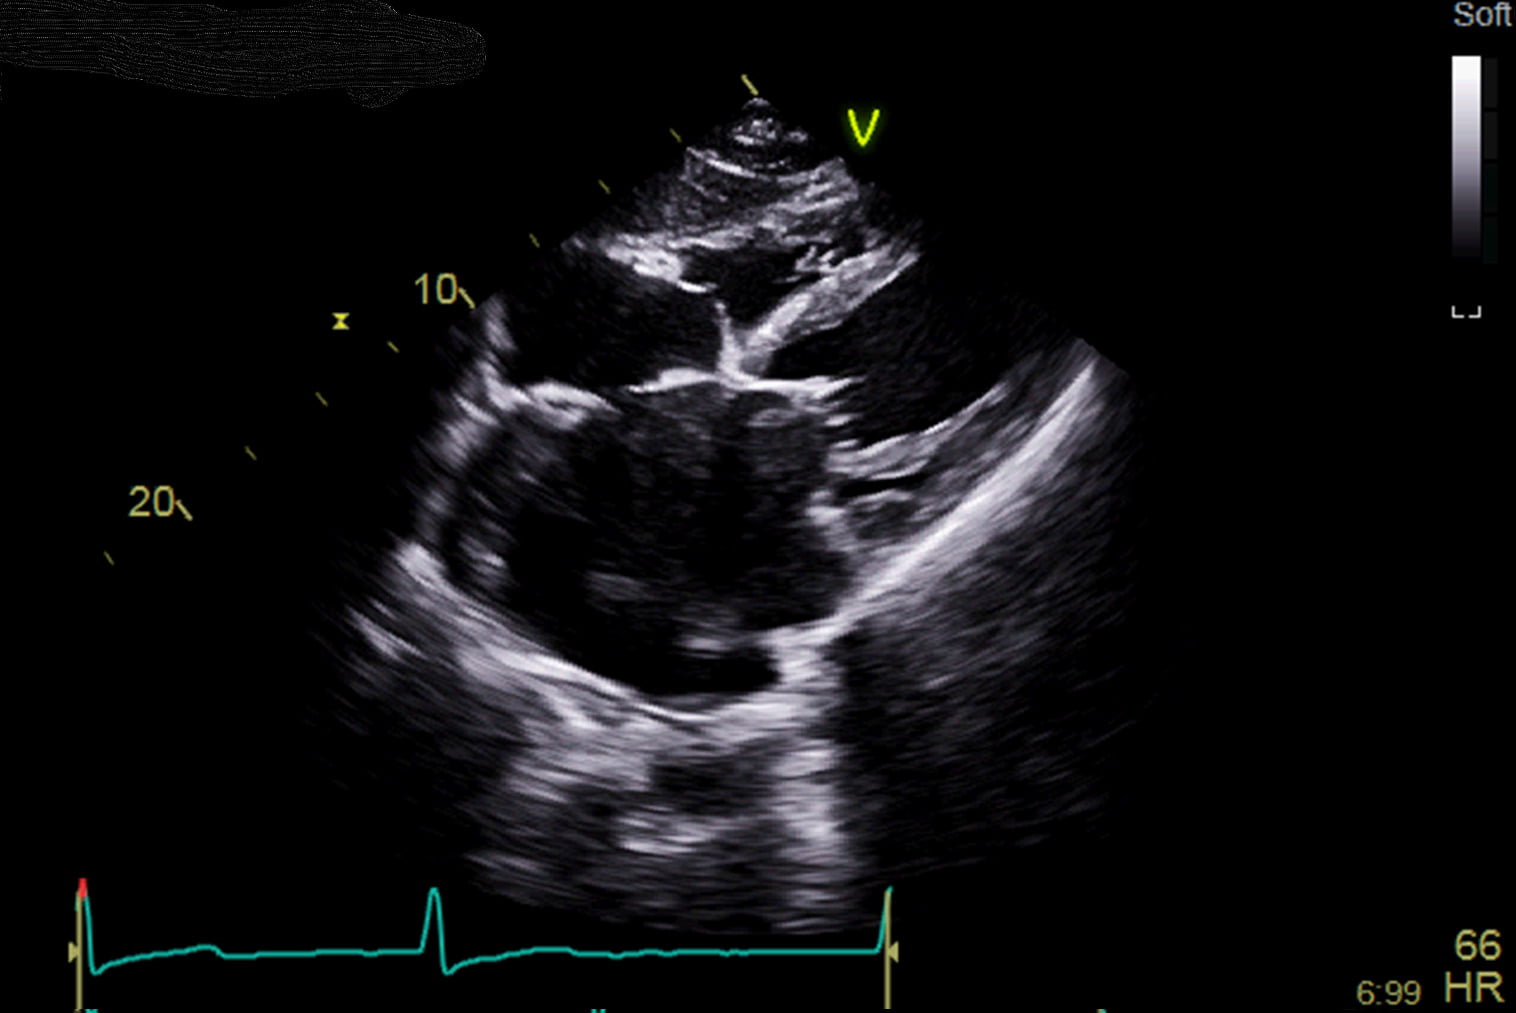 echocardiogram showing the pericardium of the heart